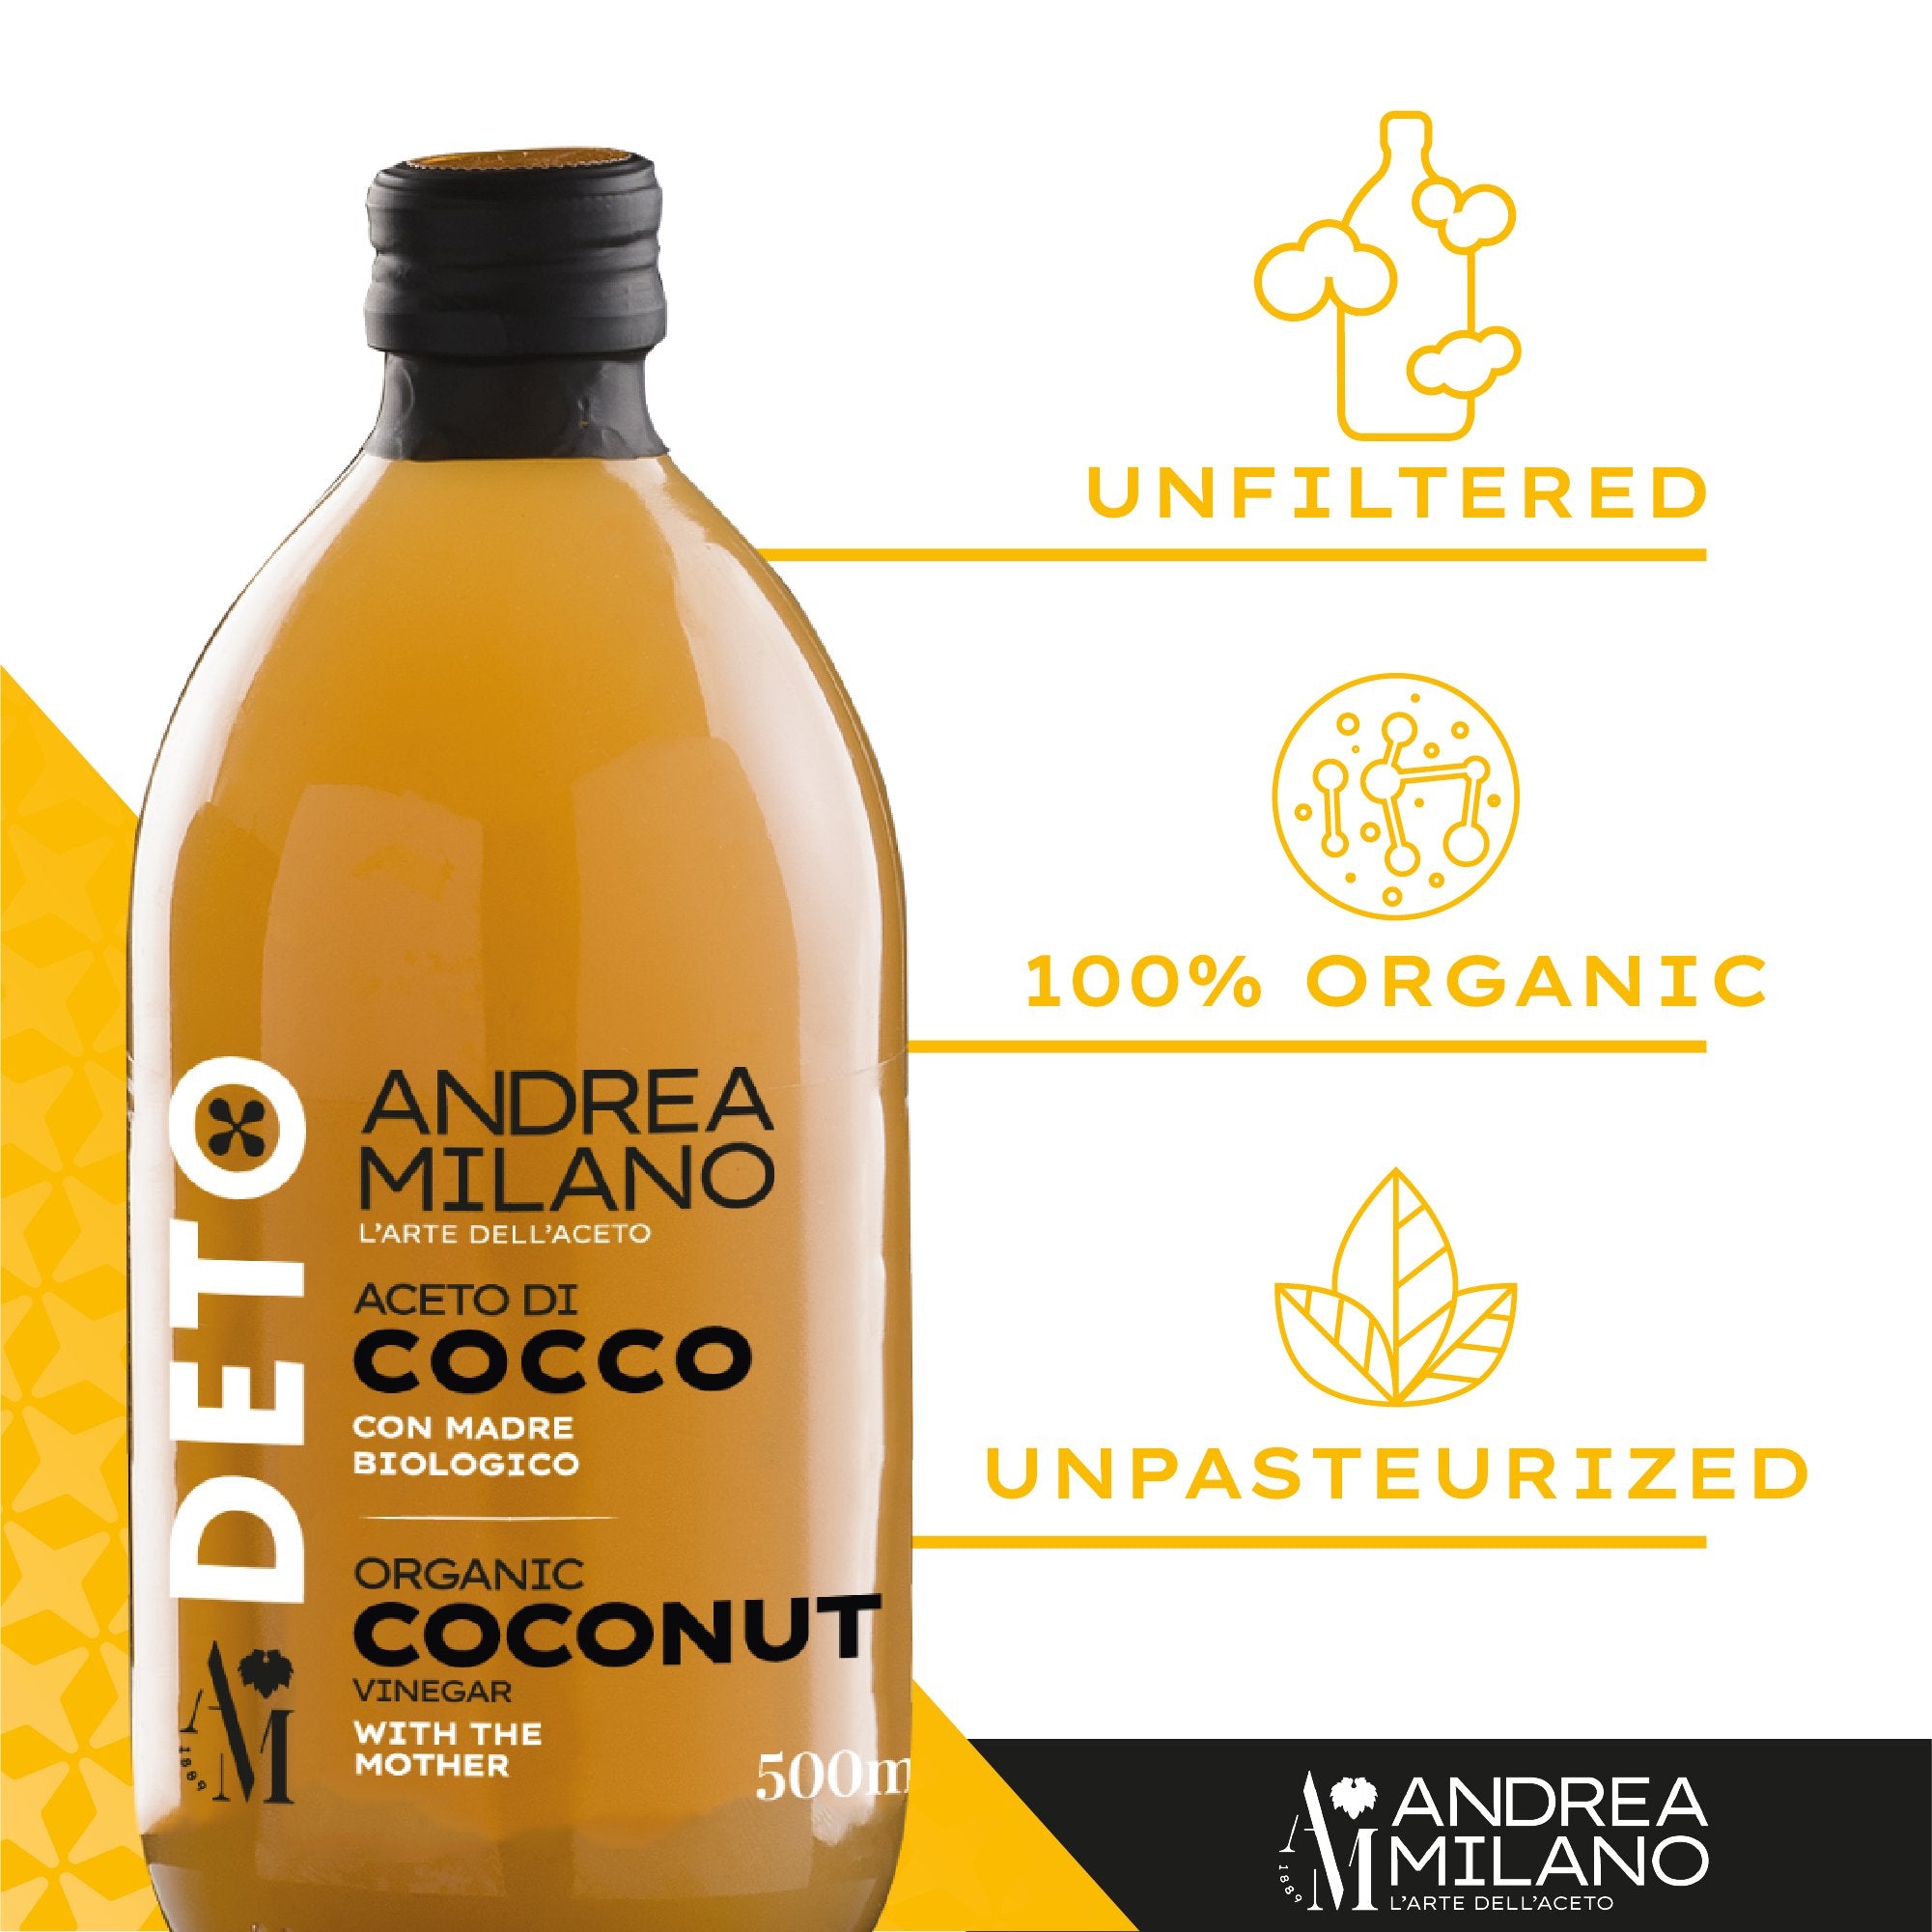 Features of Organic Deto coconut vinegar by Andrea Milano.